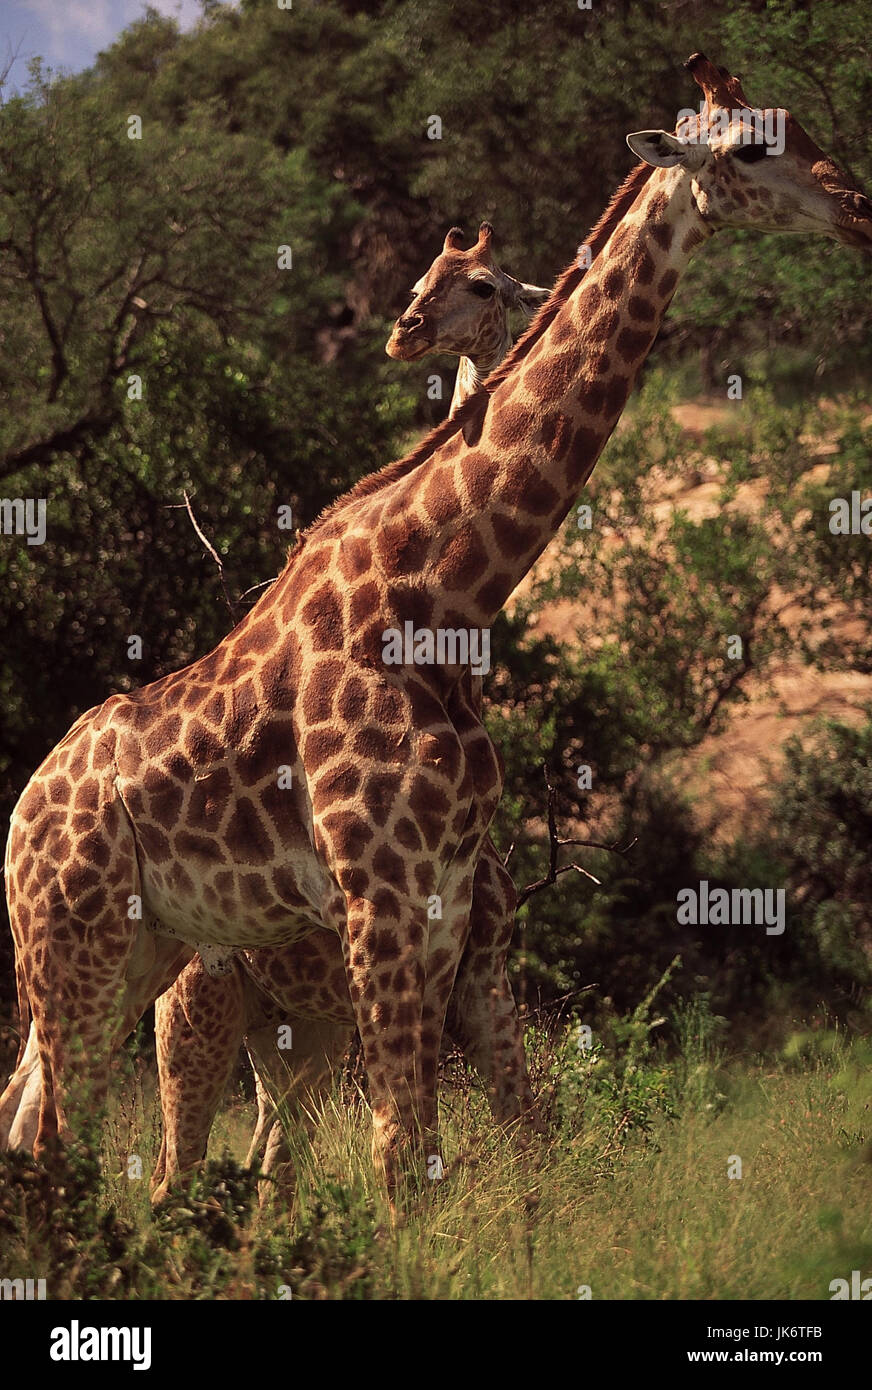 Südafrika, Mpumalanga, Kruger, Parque Nacional, Giraffen, Giraffa camelopardalis Afrika, Säugetiere Wildtiere Wildreservat,,,,, Artiodactyla Paarhufer Giraffidae Langhalsgiraffen Giraffen,,,,, Wiederkäuer Steppengiraffen zwei, neugierig, interessiert Foto de stock